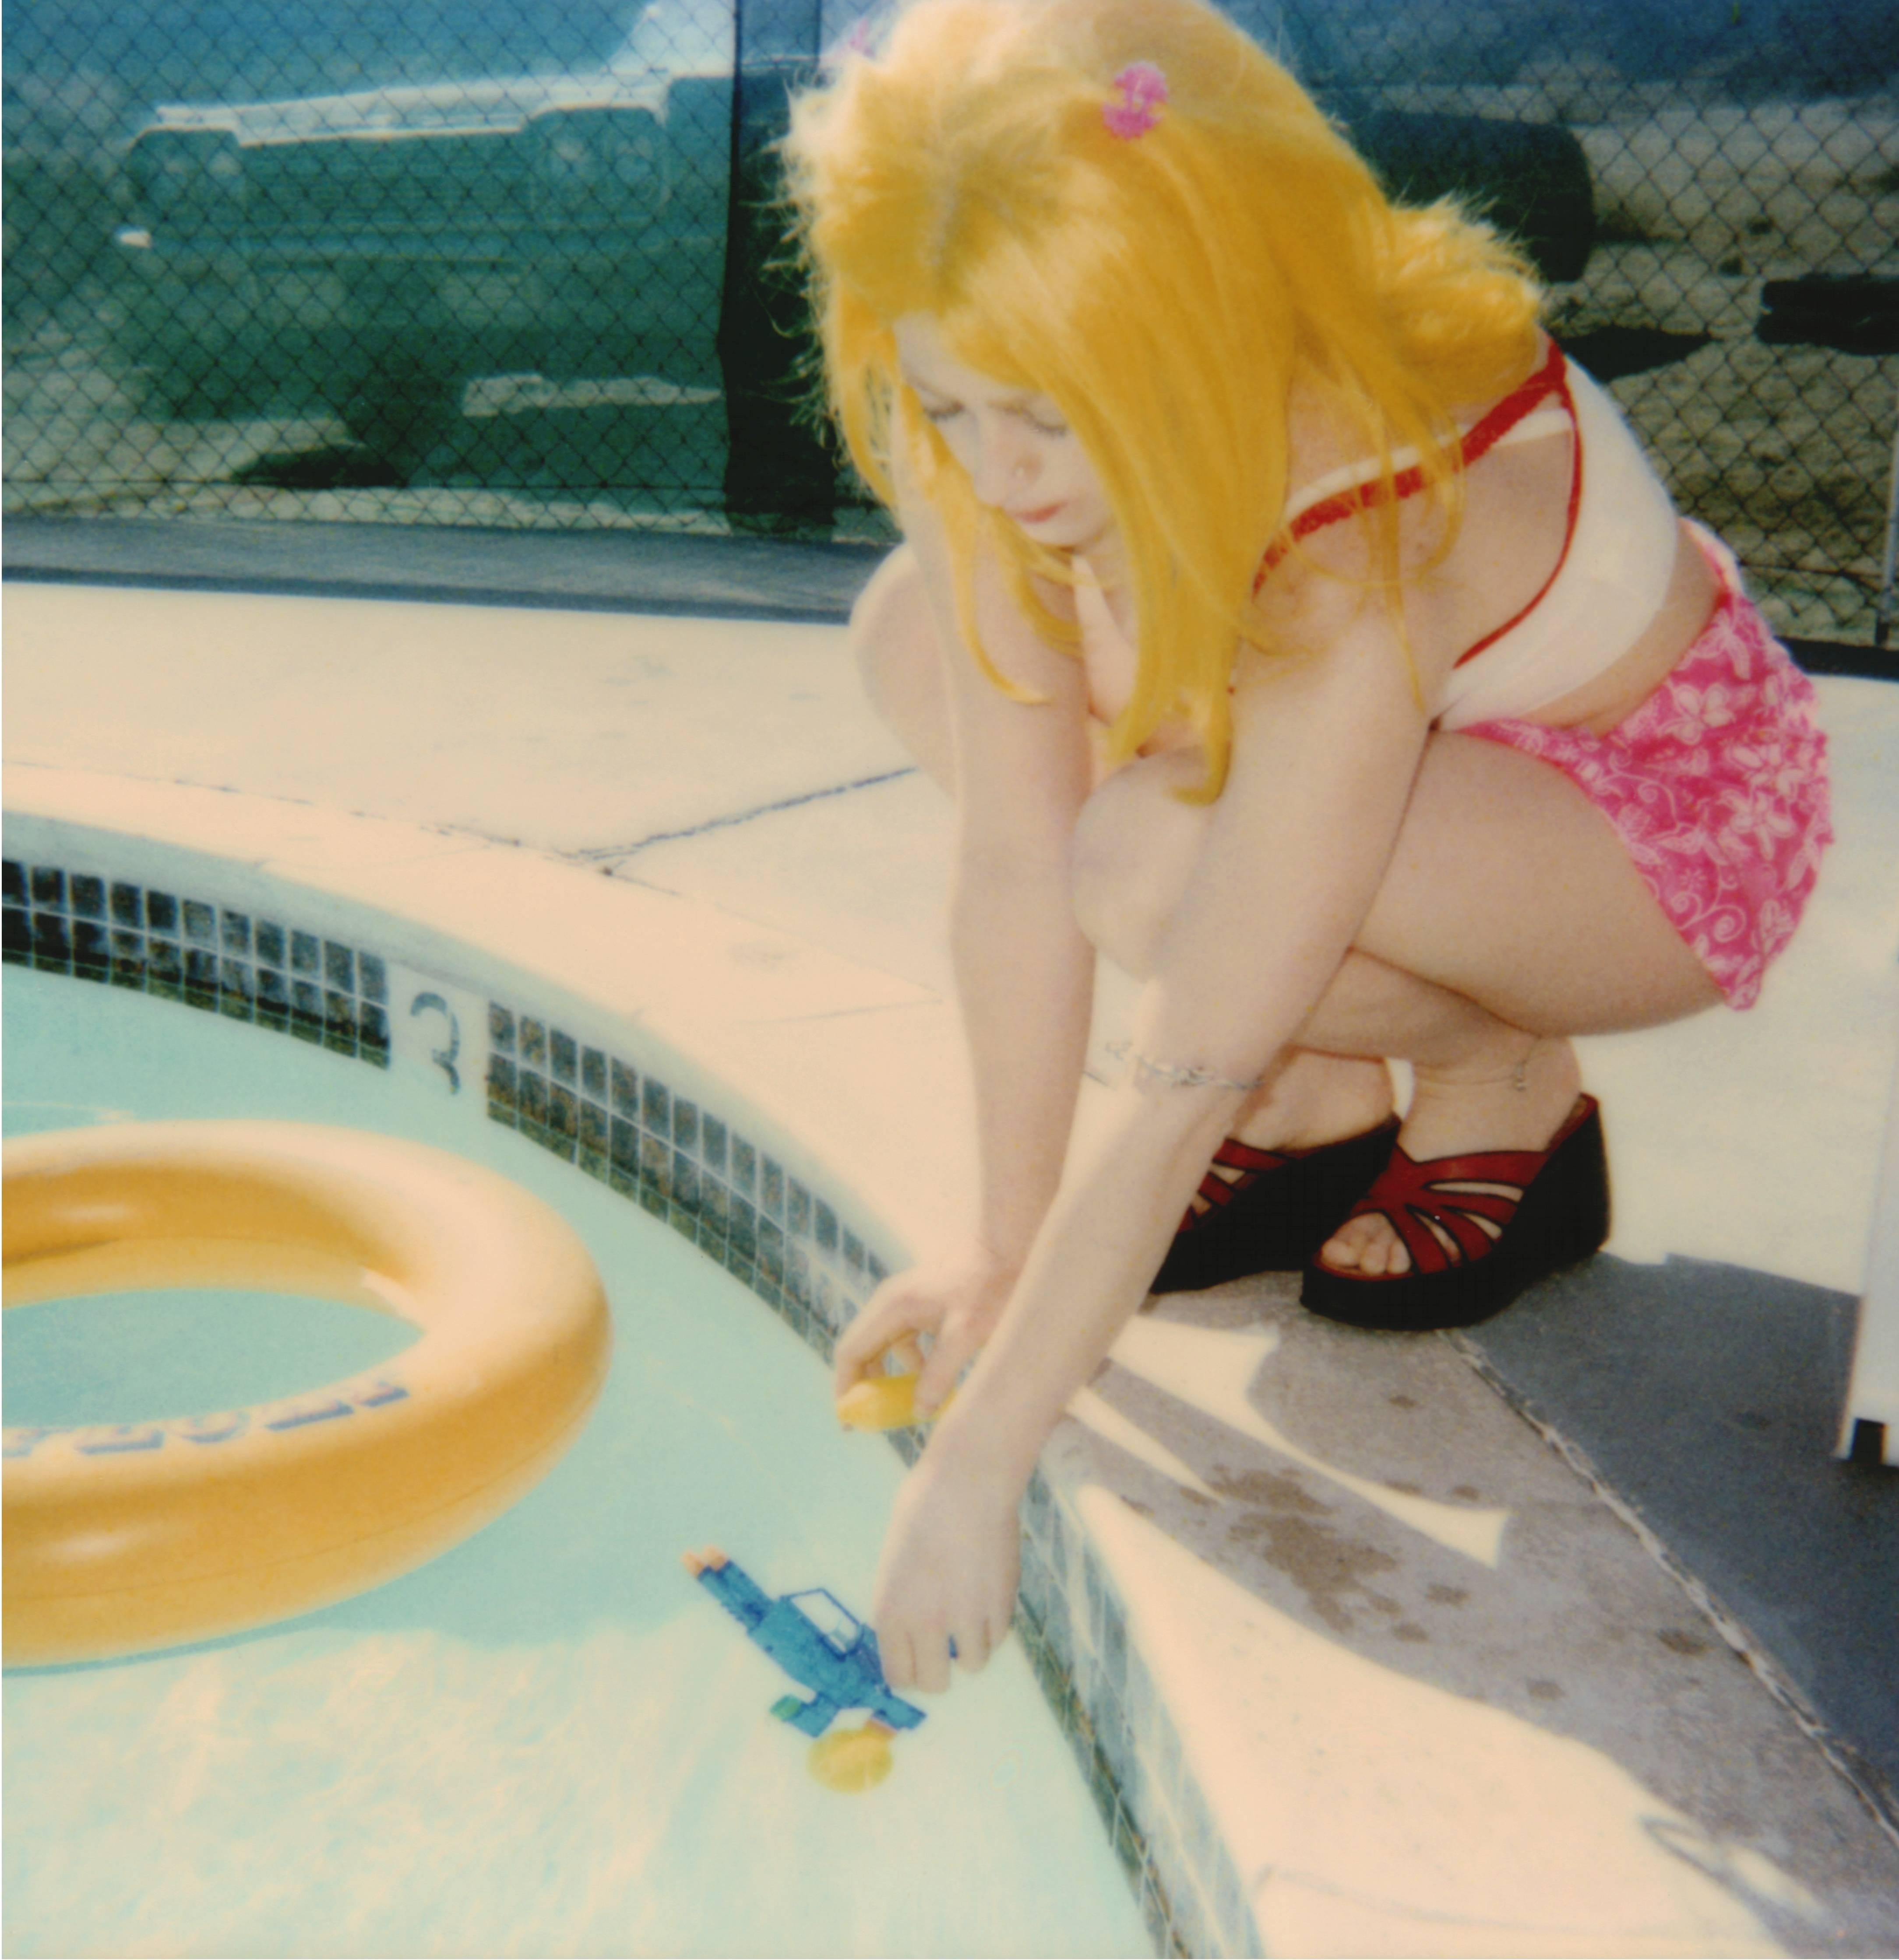 Stefanie Schneider Portrait Photograph - Max by the Pool (29 Palms, CA) - 128x125cm